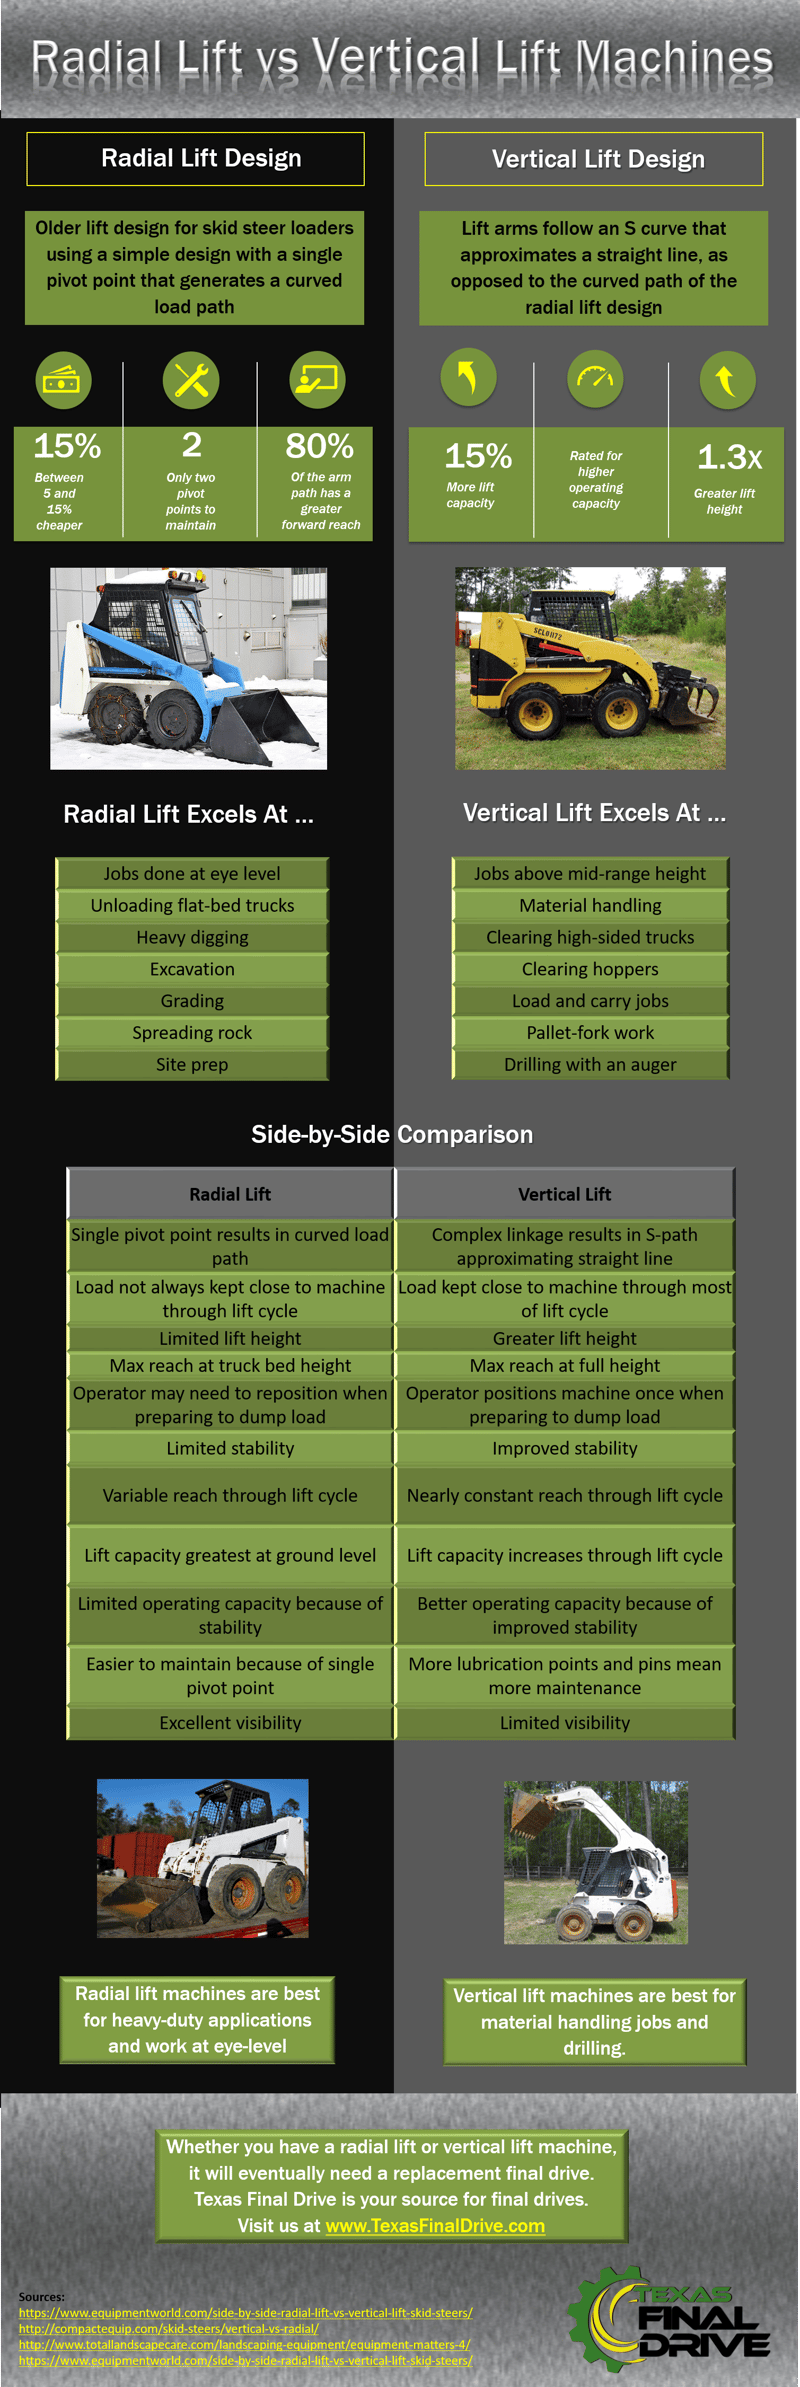 radial-lift-vs-vertical-lift-machines-infographic-ssl-ctl